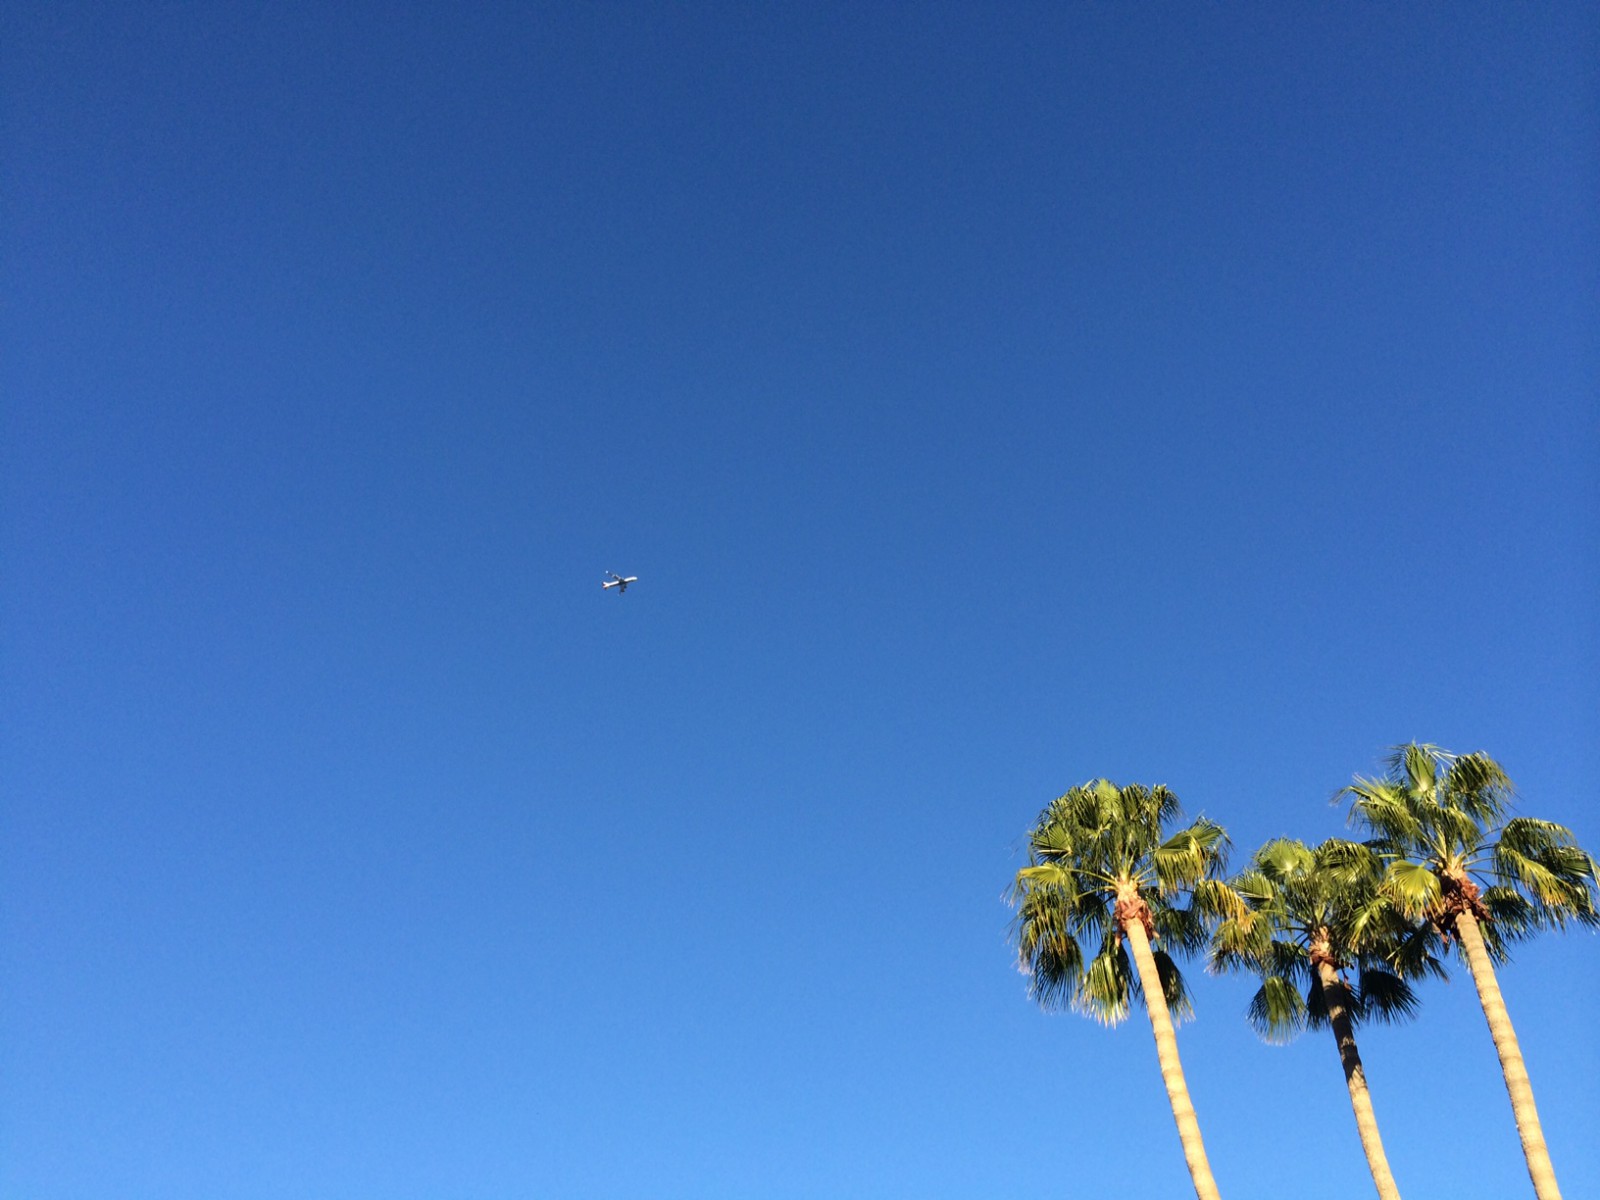 BA289 arrives in Phoenix through an incredibly clear February sky.